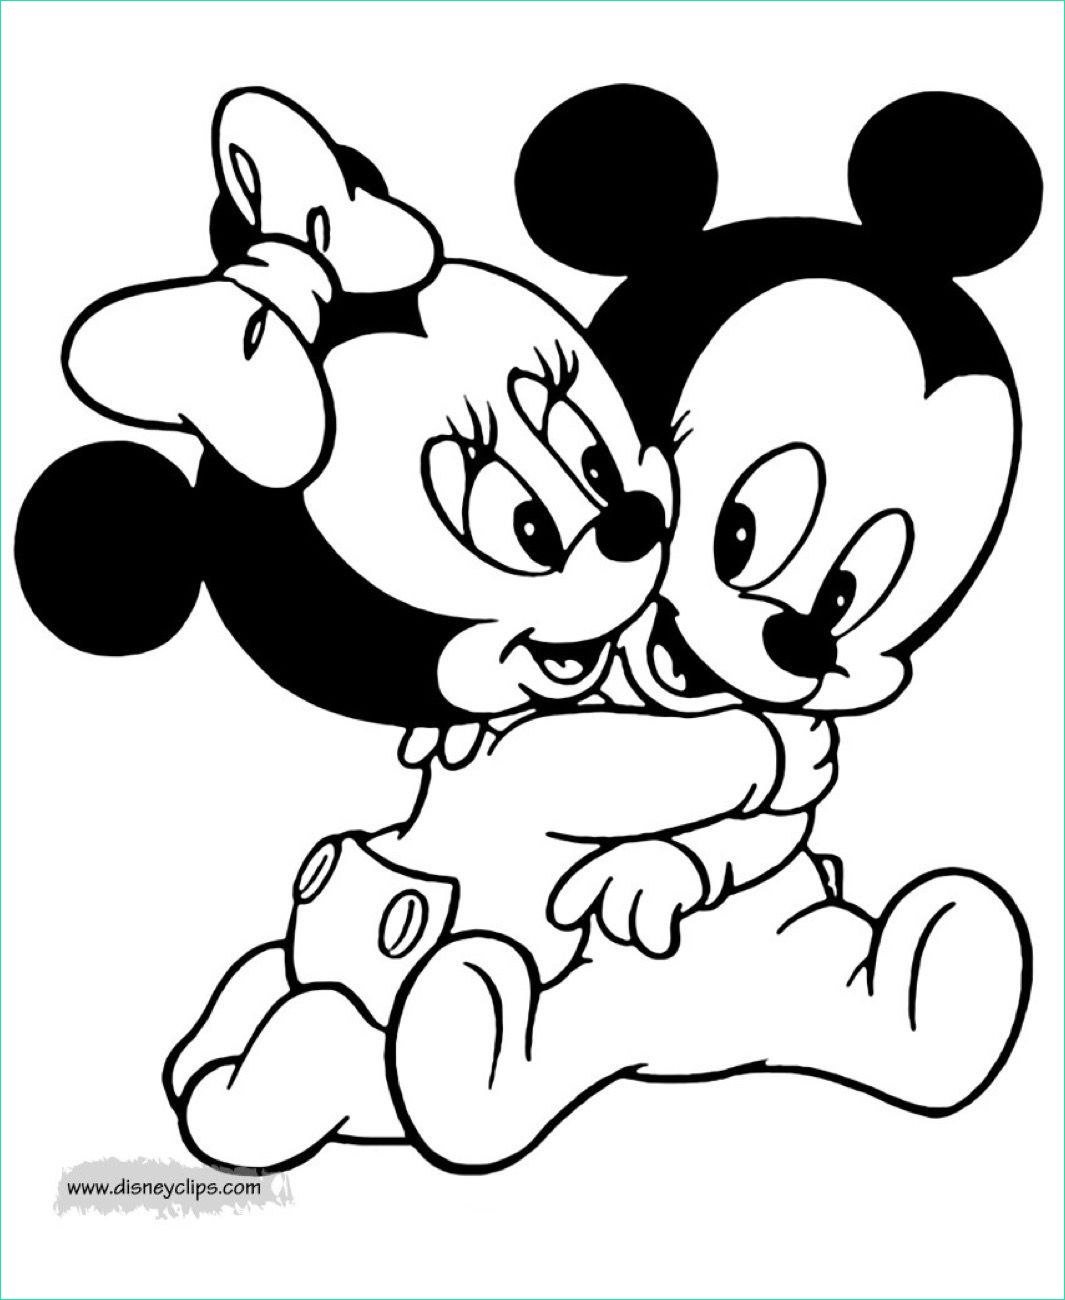 Dessin Kawaii Disney Élégant Photos Coloriage Kawaii Disney Cool Image Épinglé Par sophie